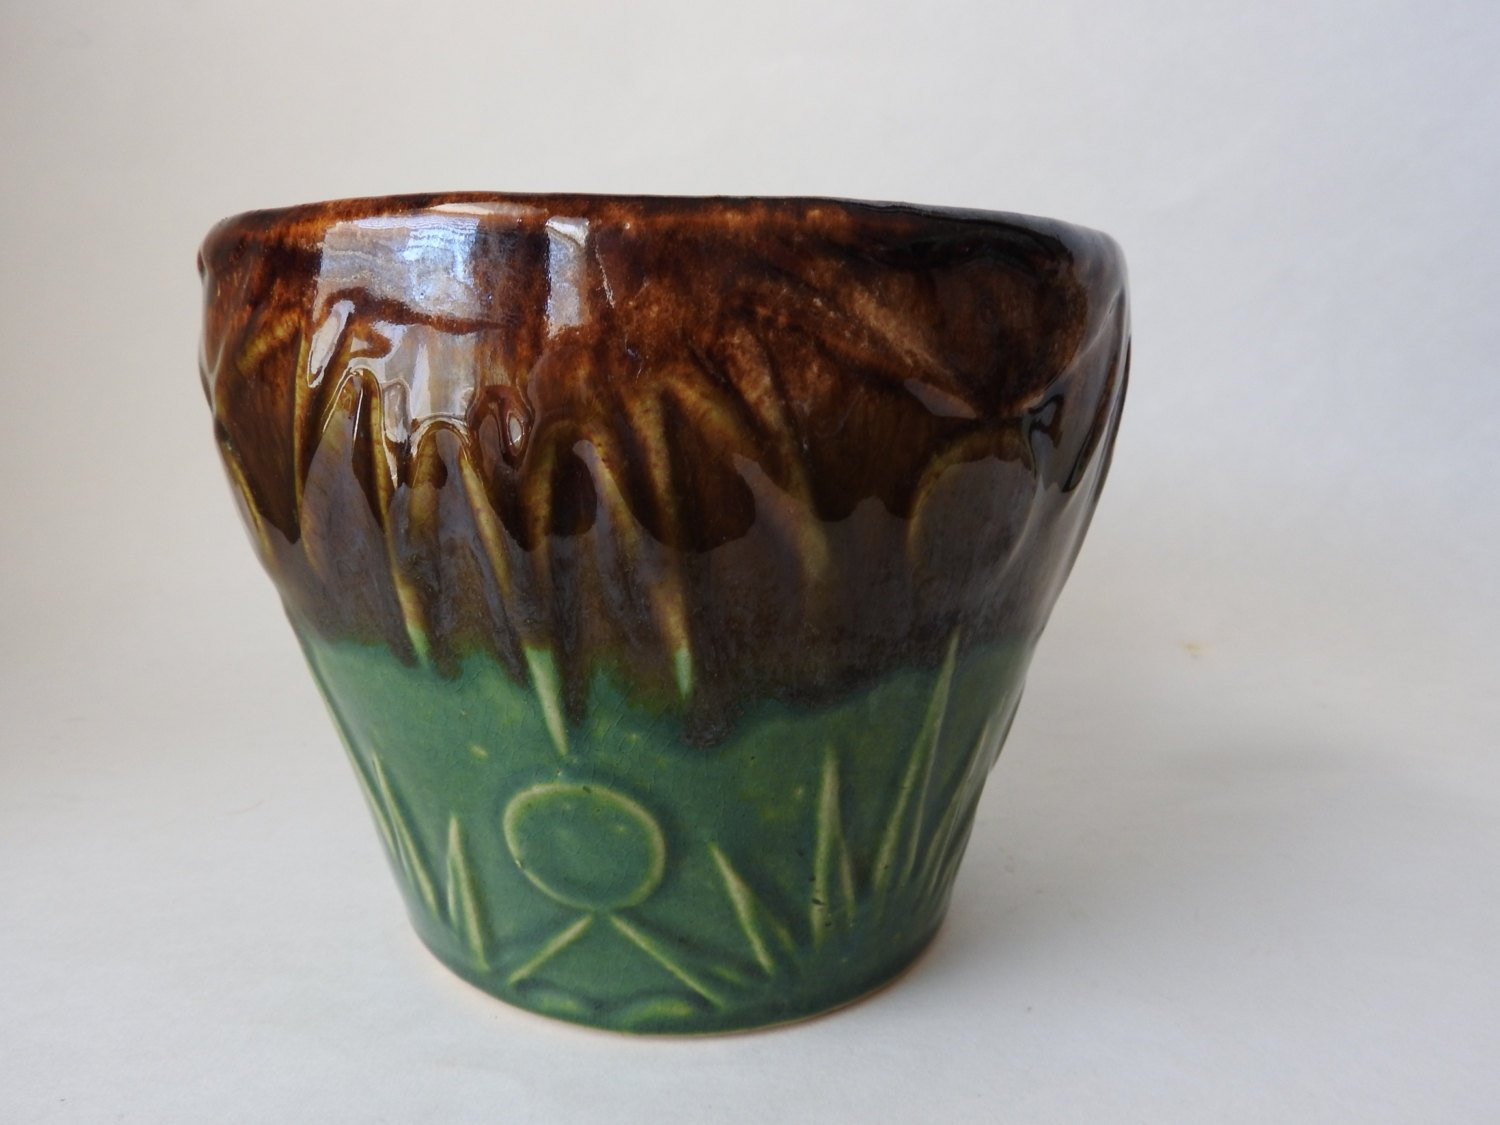 12 Elegant Mccoy Pottery Flower Vases 2024 free download mccoy pottery flower vases of vintage atomic style sun and moon patterned roseville etsy in dc29fc294c28ezoom